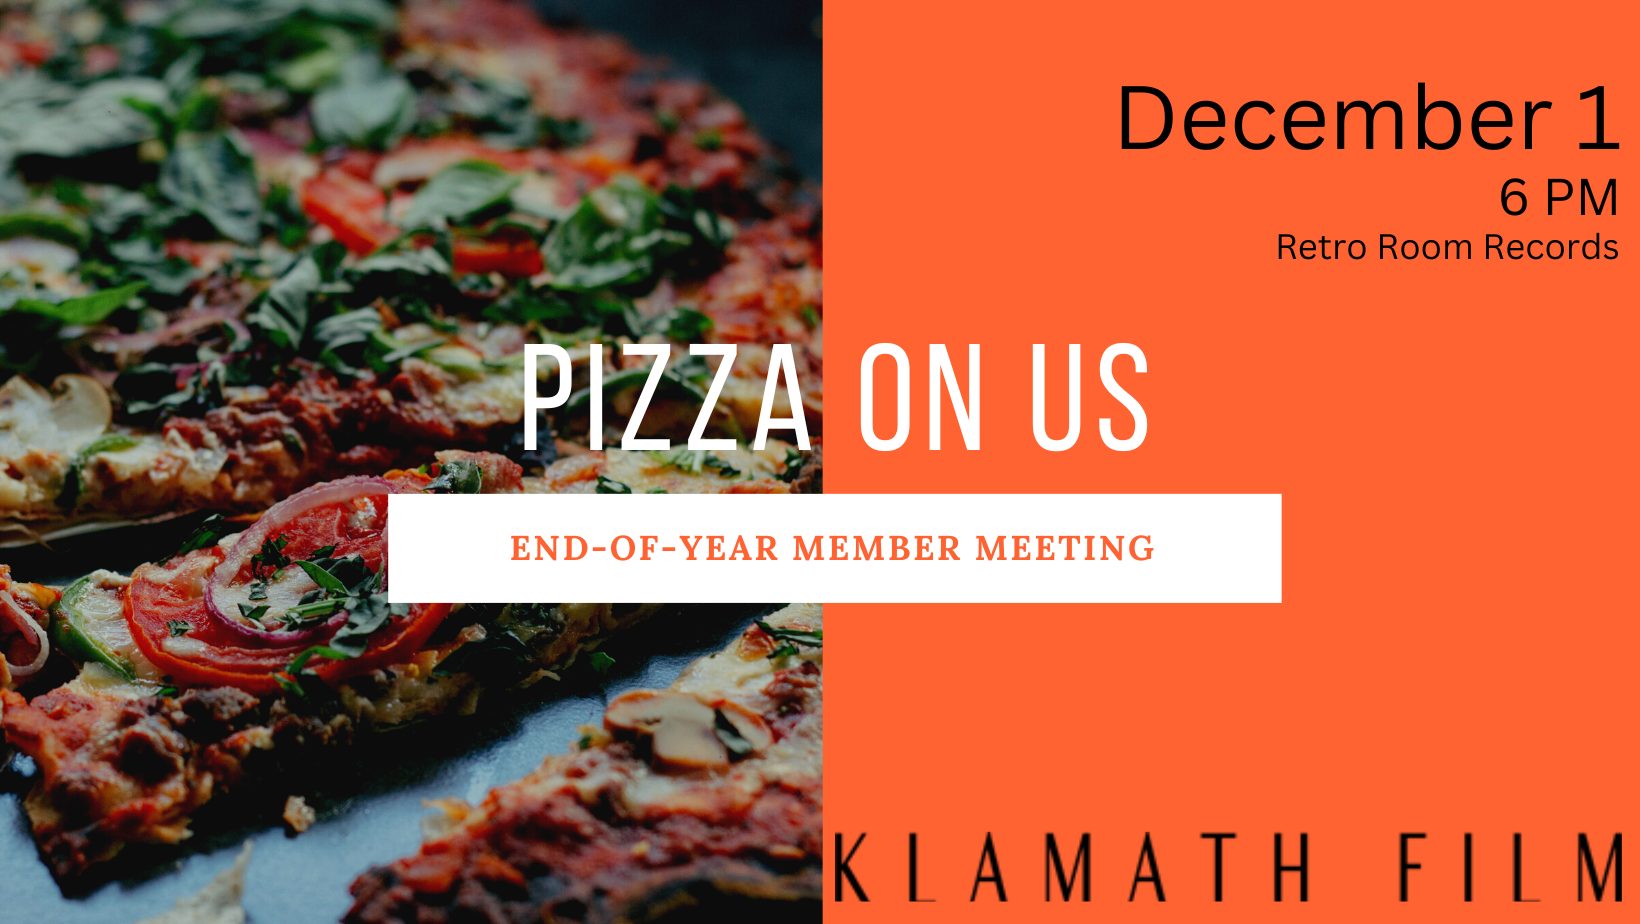 Free Pizza at December Klamath Film meeting Thursday